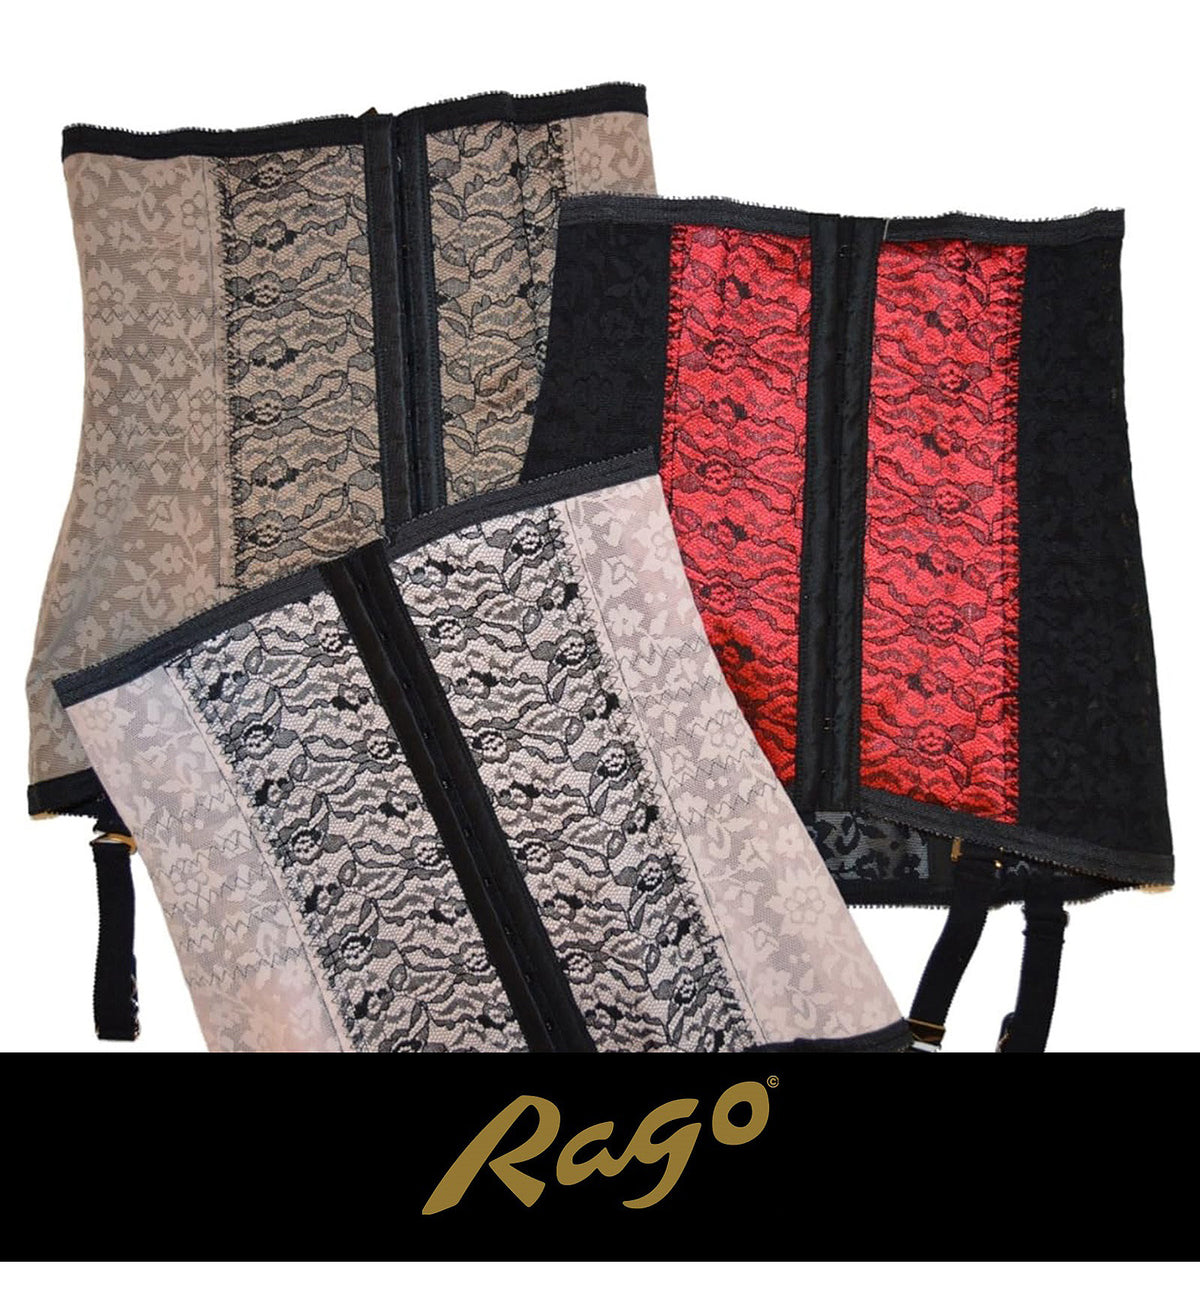 Rago Extra Firm Waist Cincher with Garters (2107),Small,Mocha/Black - Mocha/Black,Small